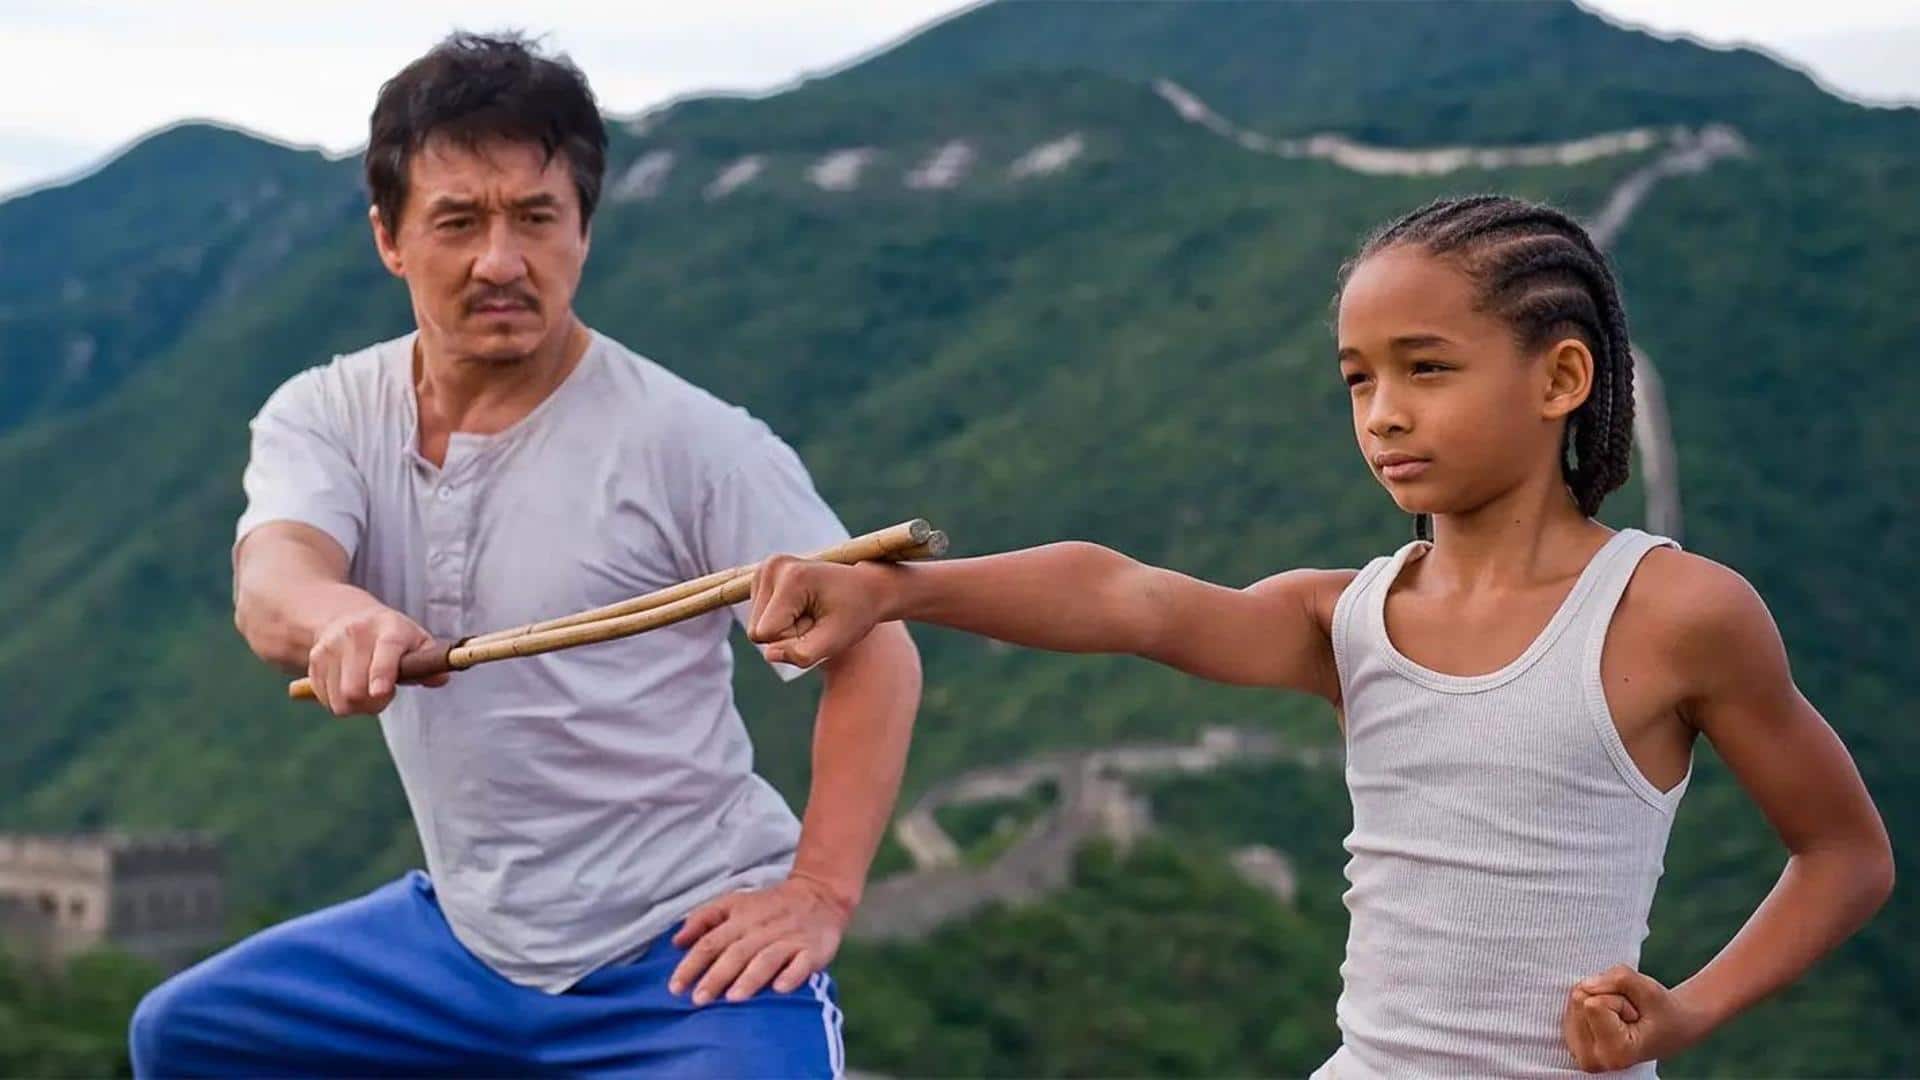 Jackie Chan might star in next 'Karate Kid' film: Report